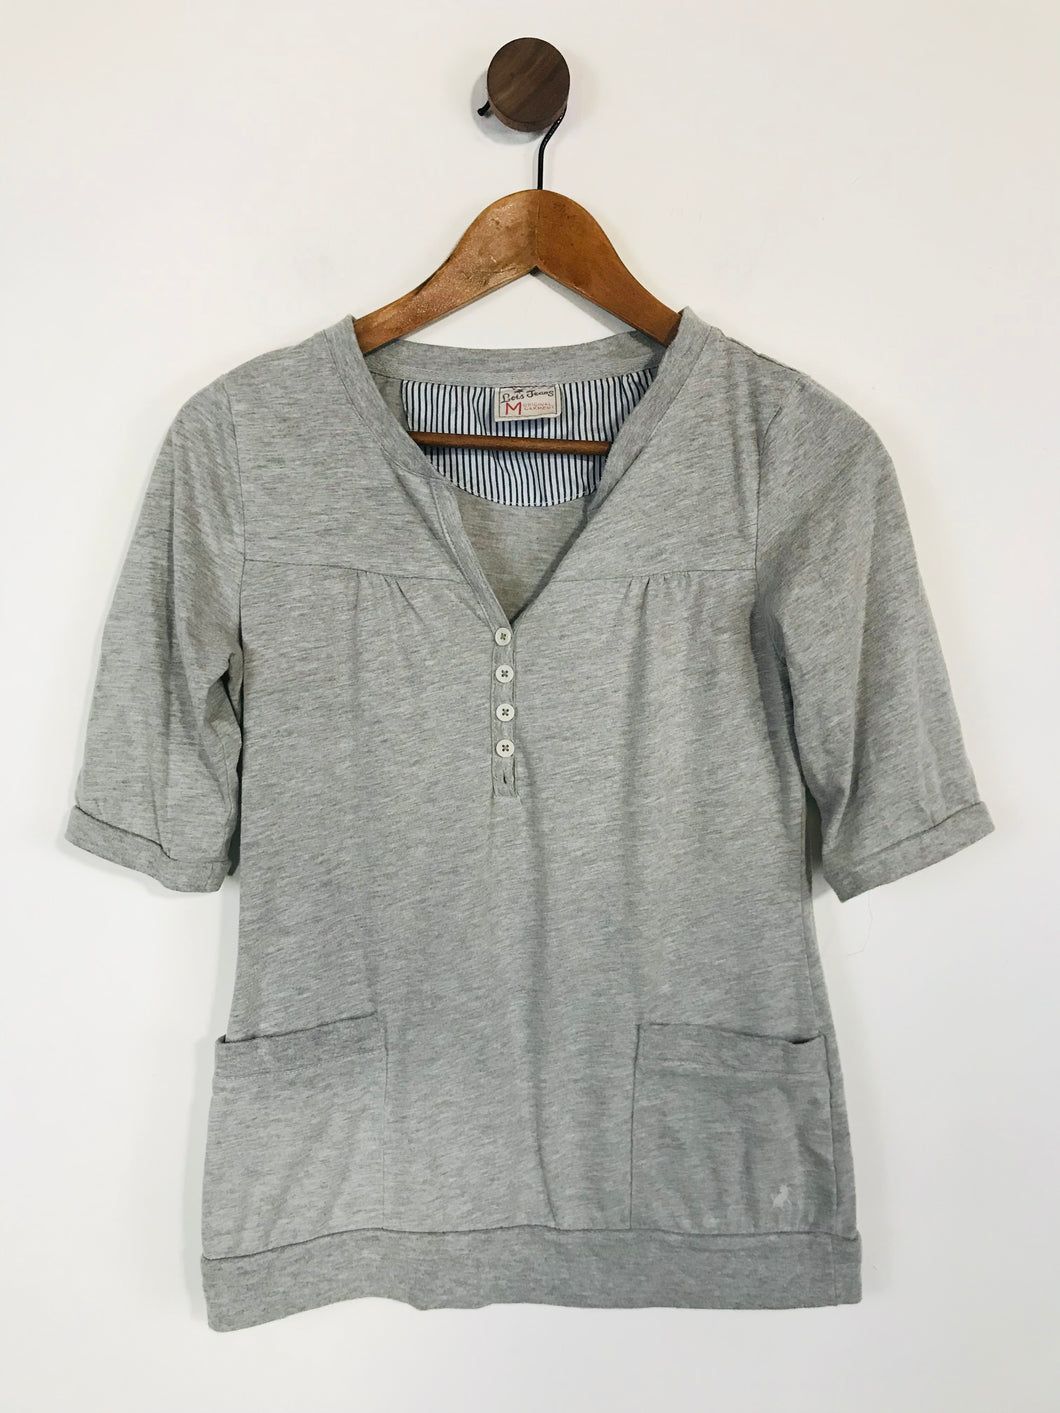 Lois Women's Cotton Buttoned T-Shirt  | M UK10-12 | Grey